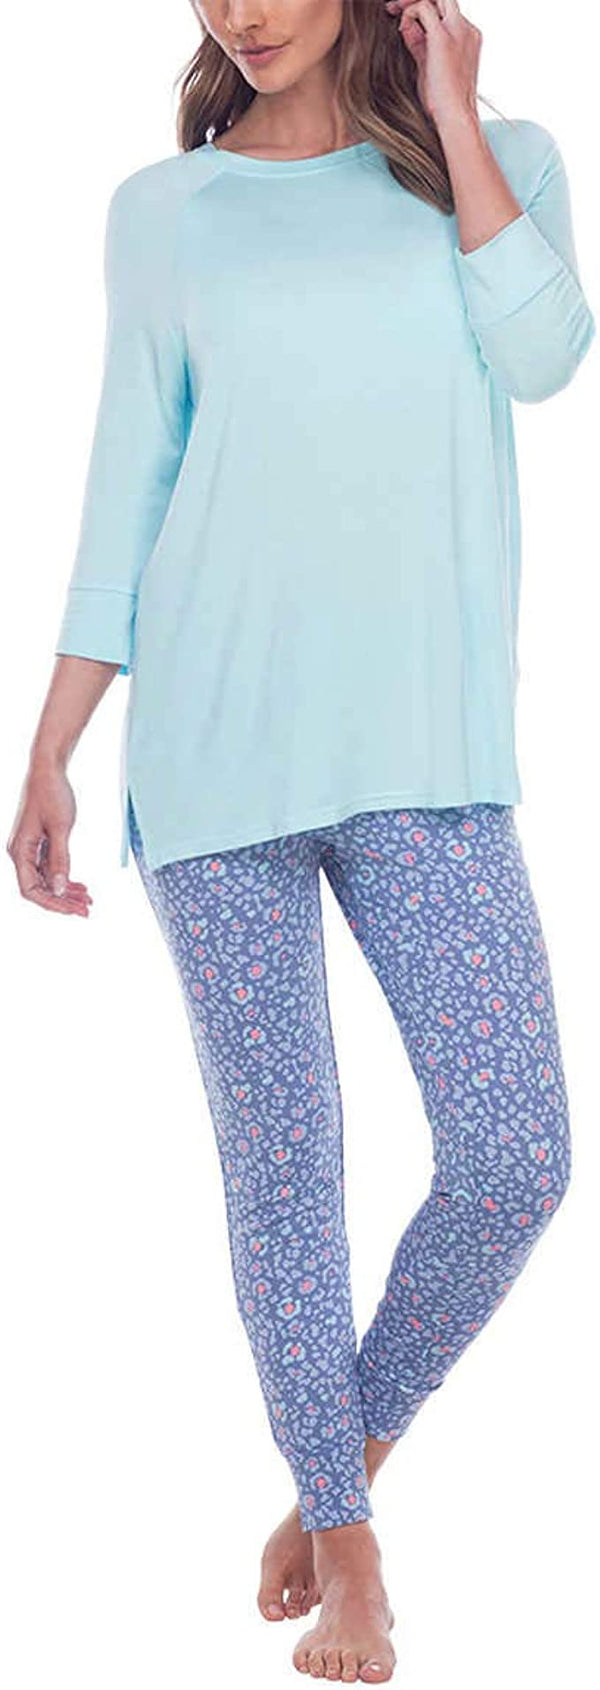 Honeydew Womens Solid Pajama Top,Aqua,Medium